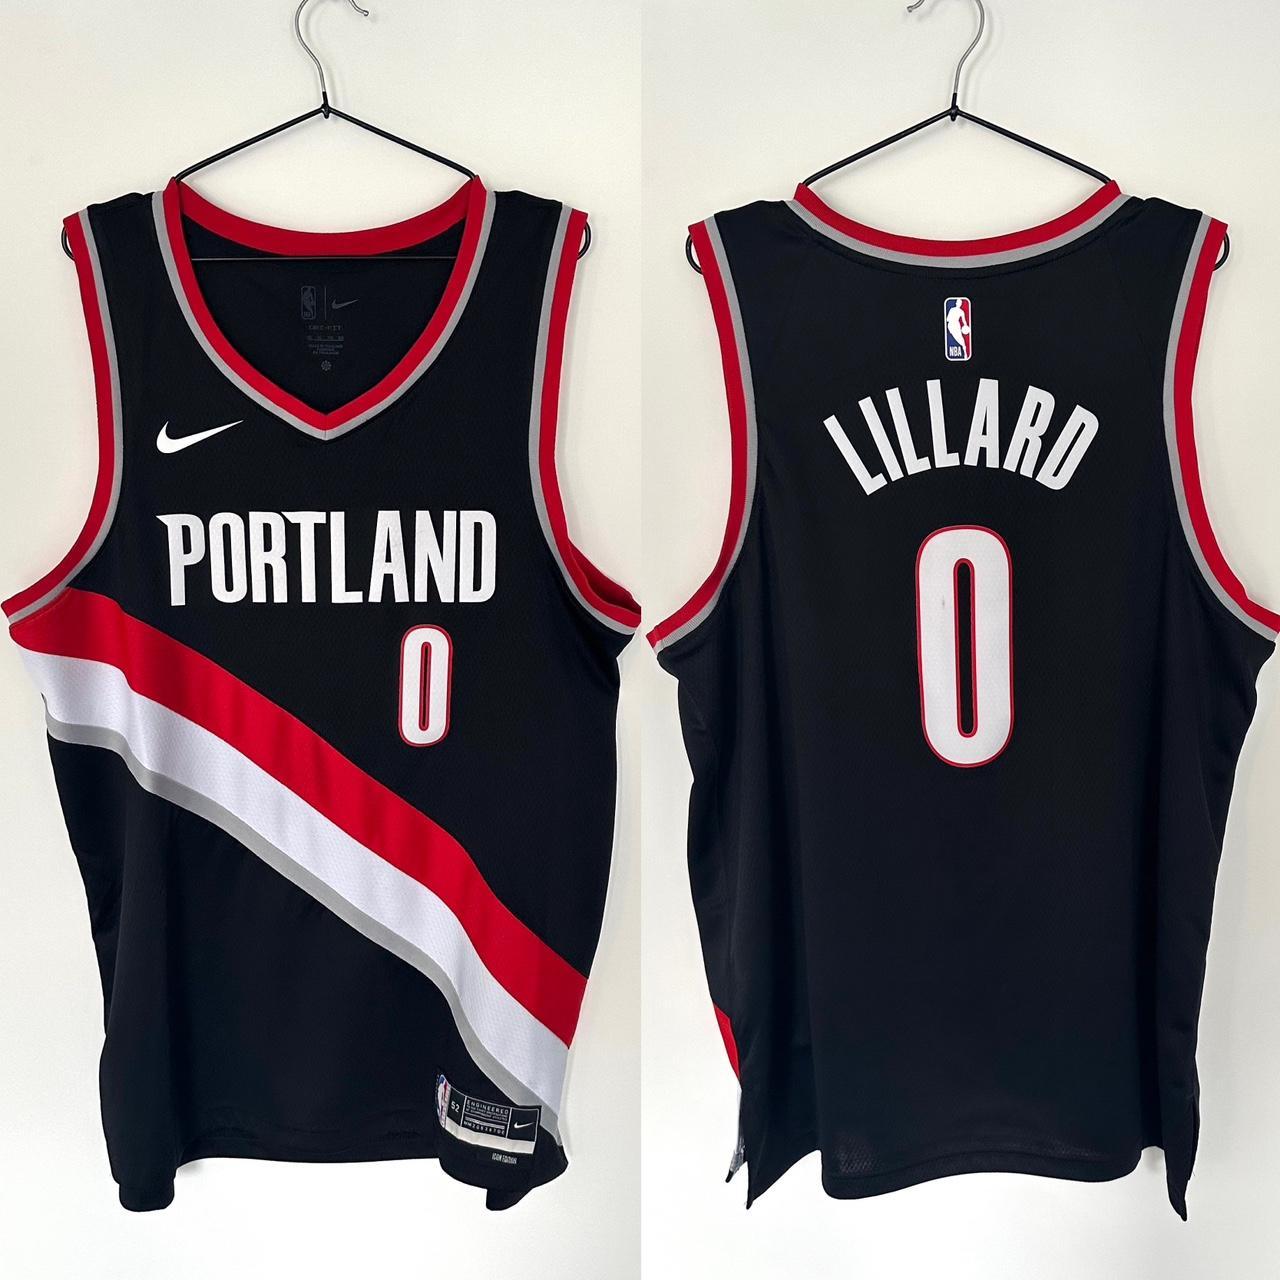 Portland Trail Blazers NBA jersey - Depop